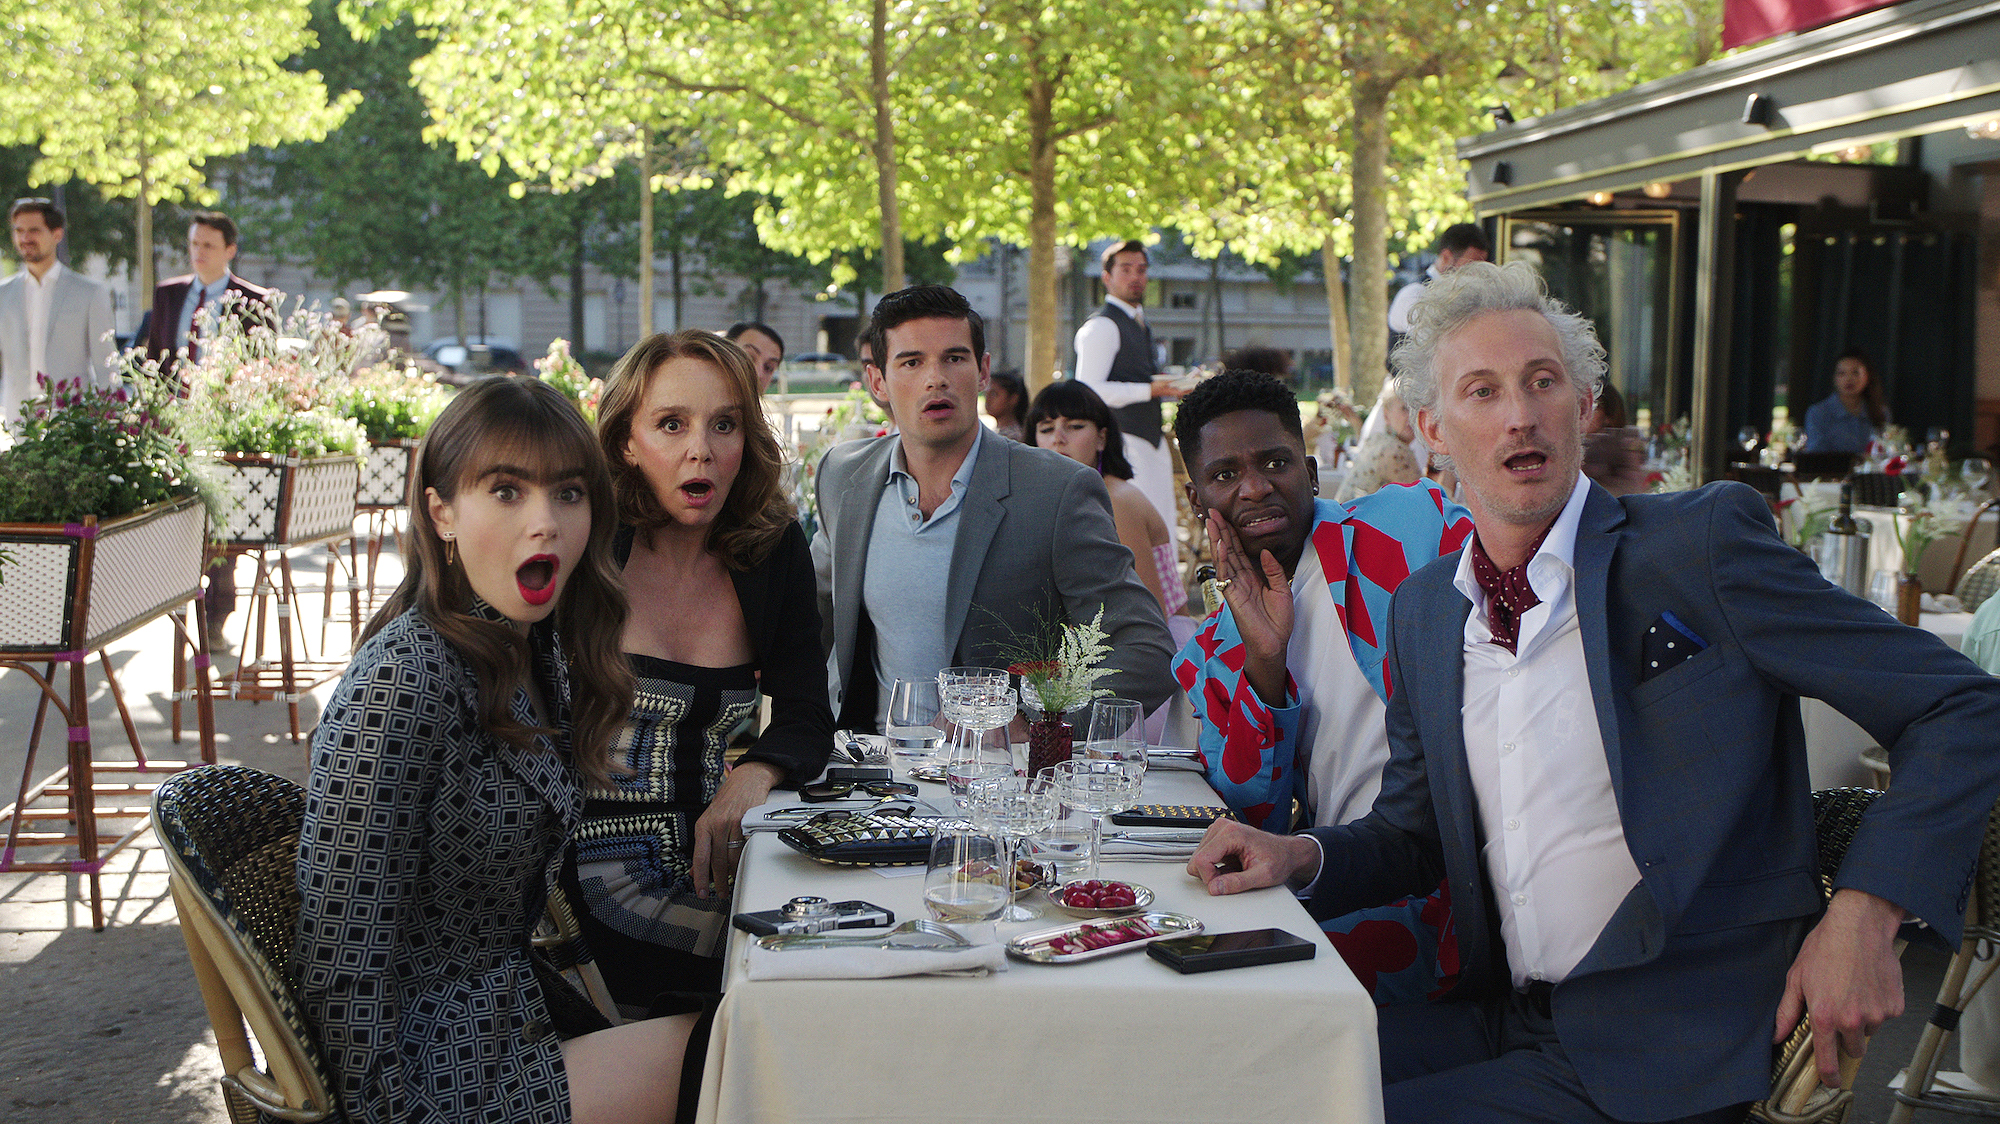 Emily In Paris Season 4: Cast, Release Date, Details